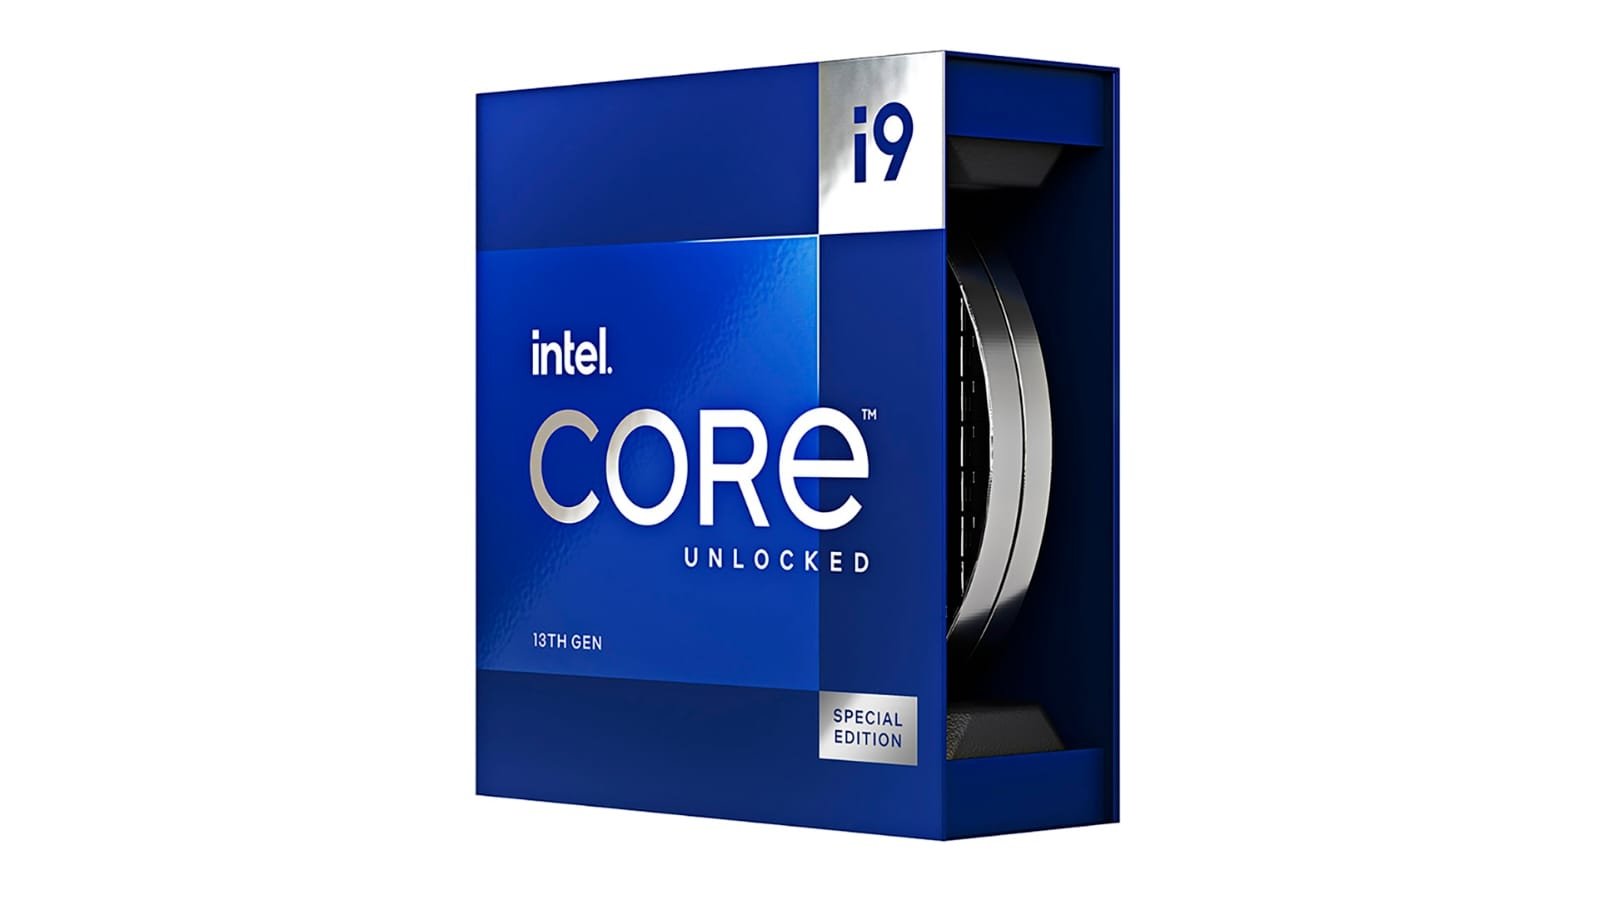 Intel's new desktop processor with 6GHz clock speed